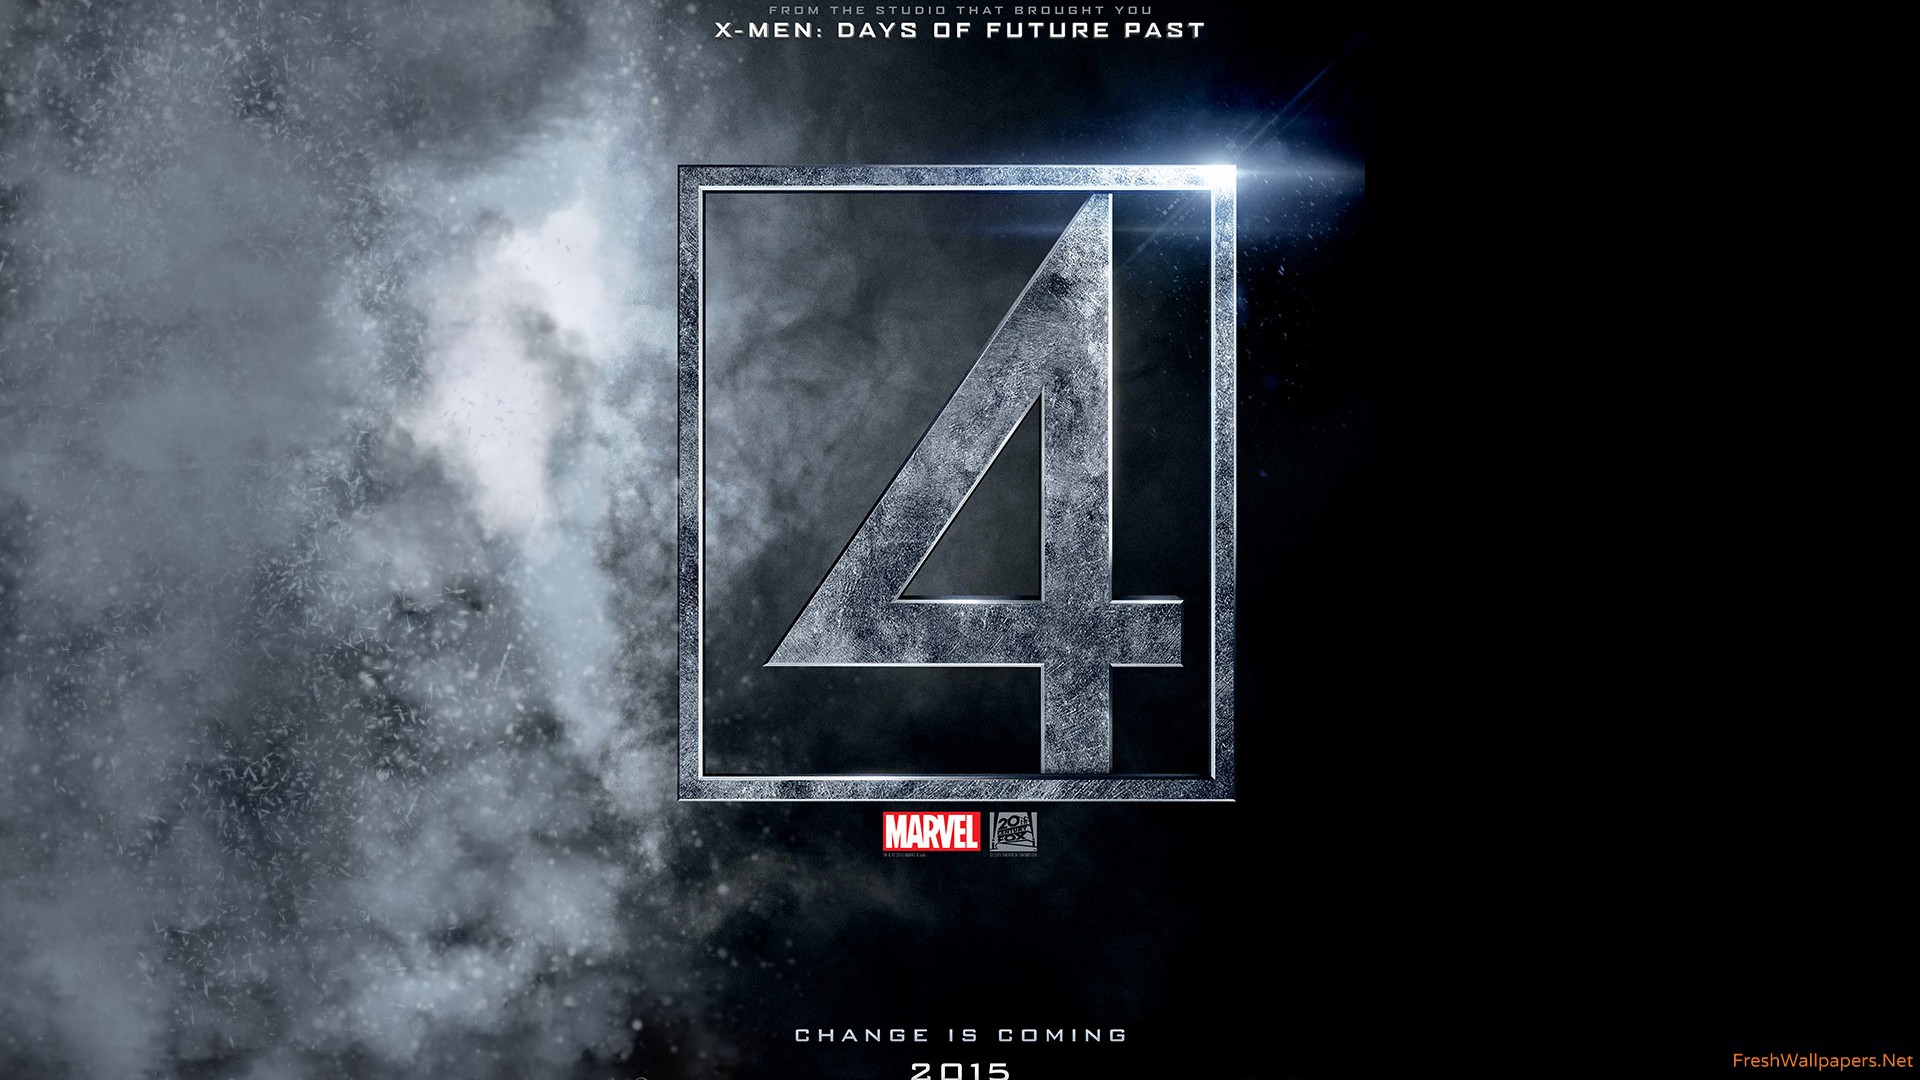 The Fantastic Four Movie Poster Wallpaper Freshwallpaper